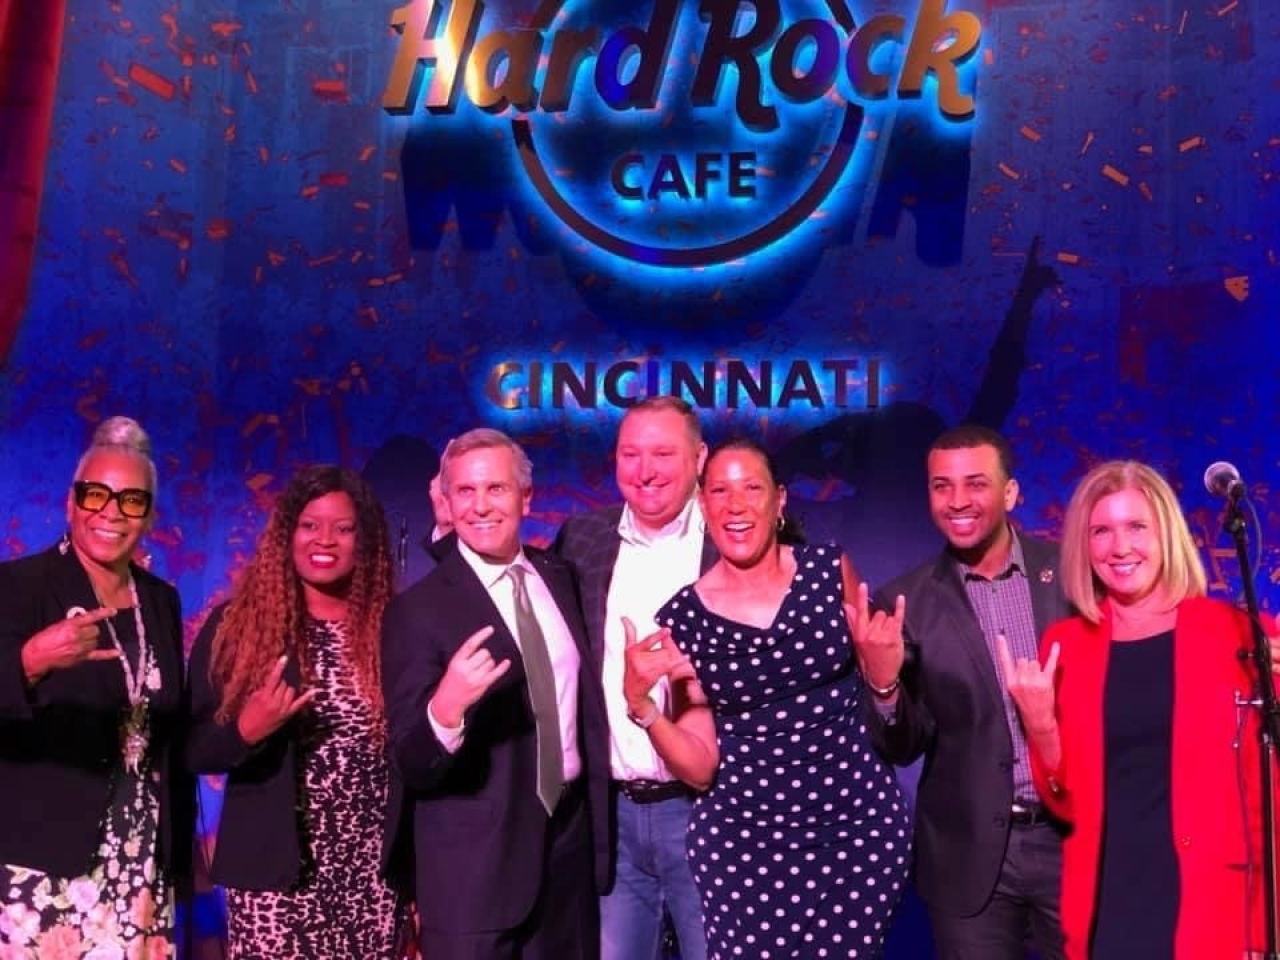 Rep. Ingram attends a sneak peak tour of the Hard Rock Cafe in Cincinnati